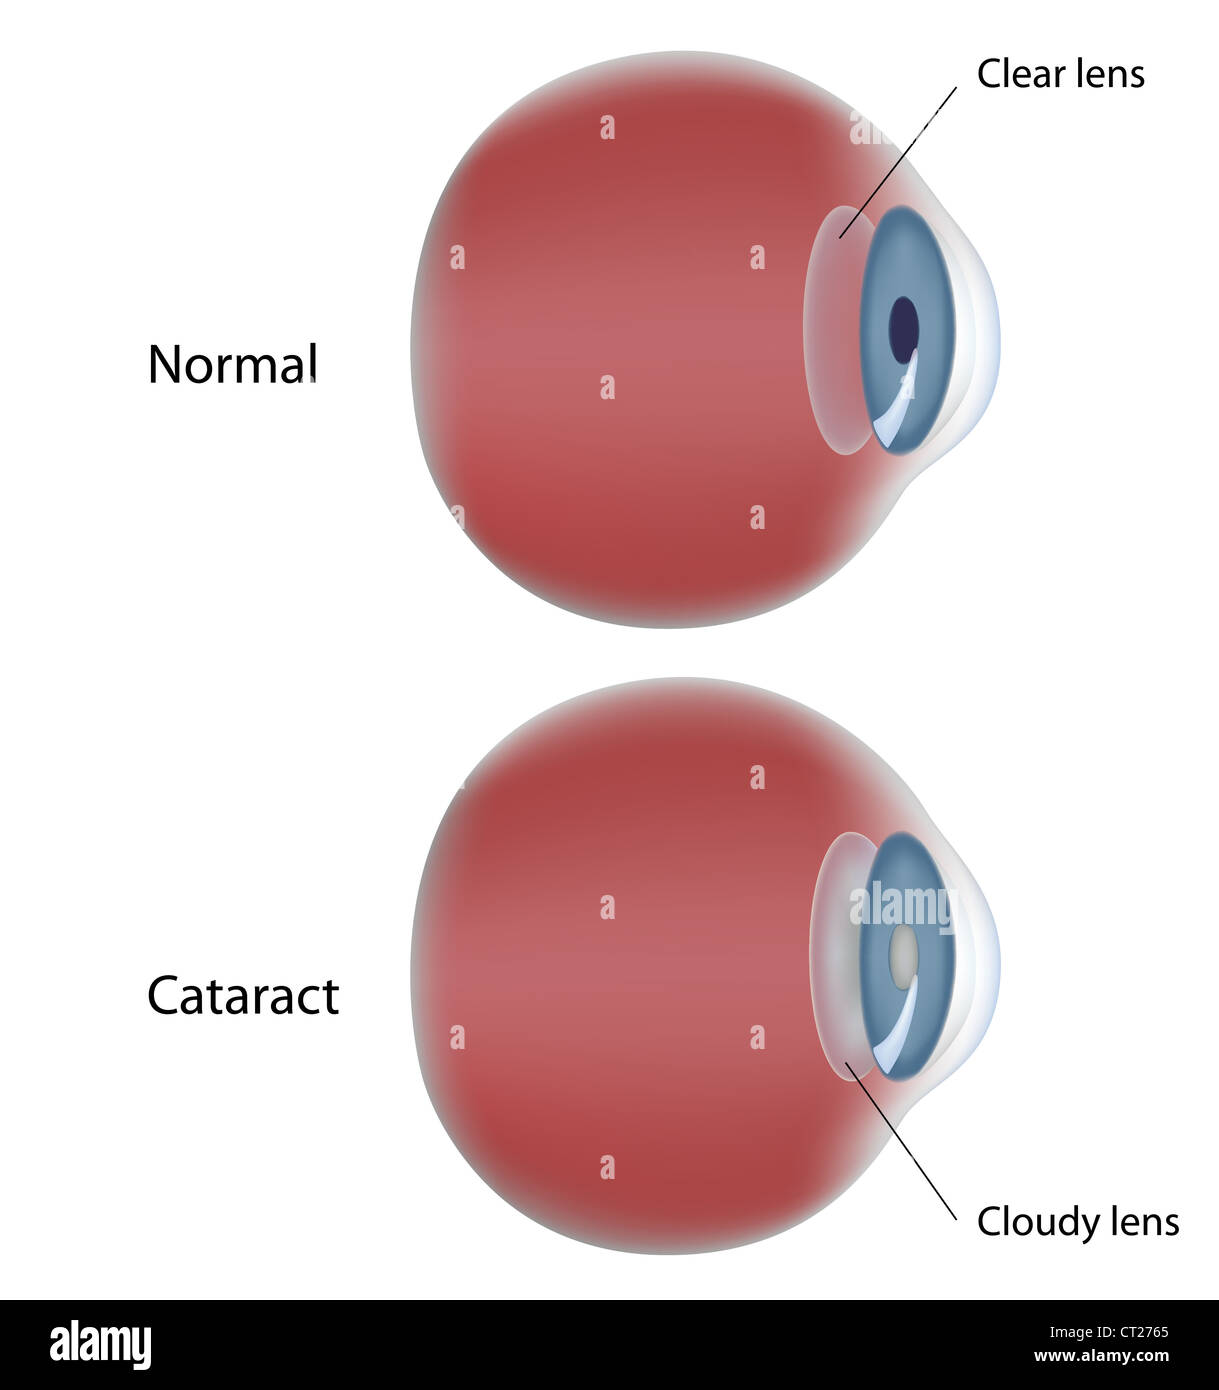 Eye disease - Cataract Stock Photo